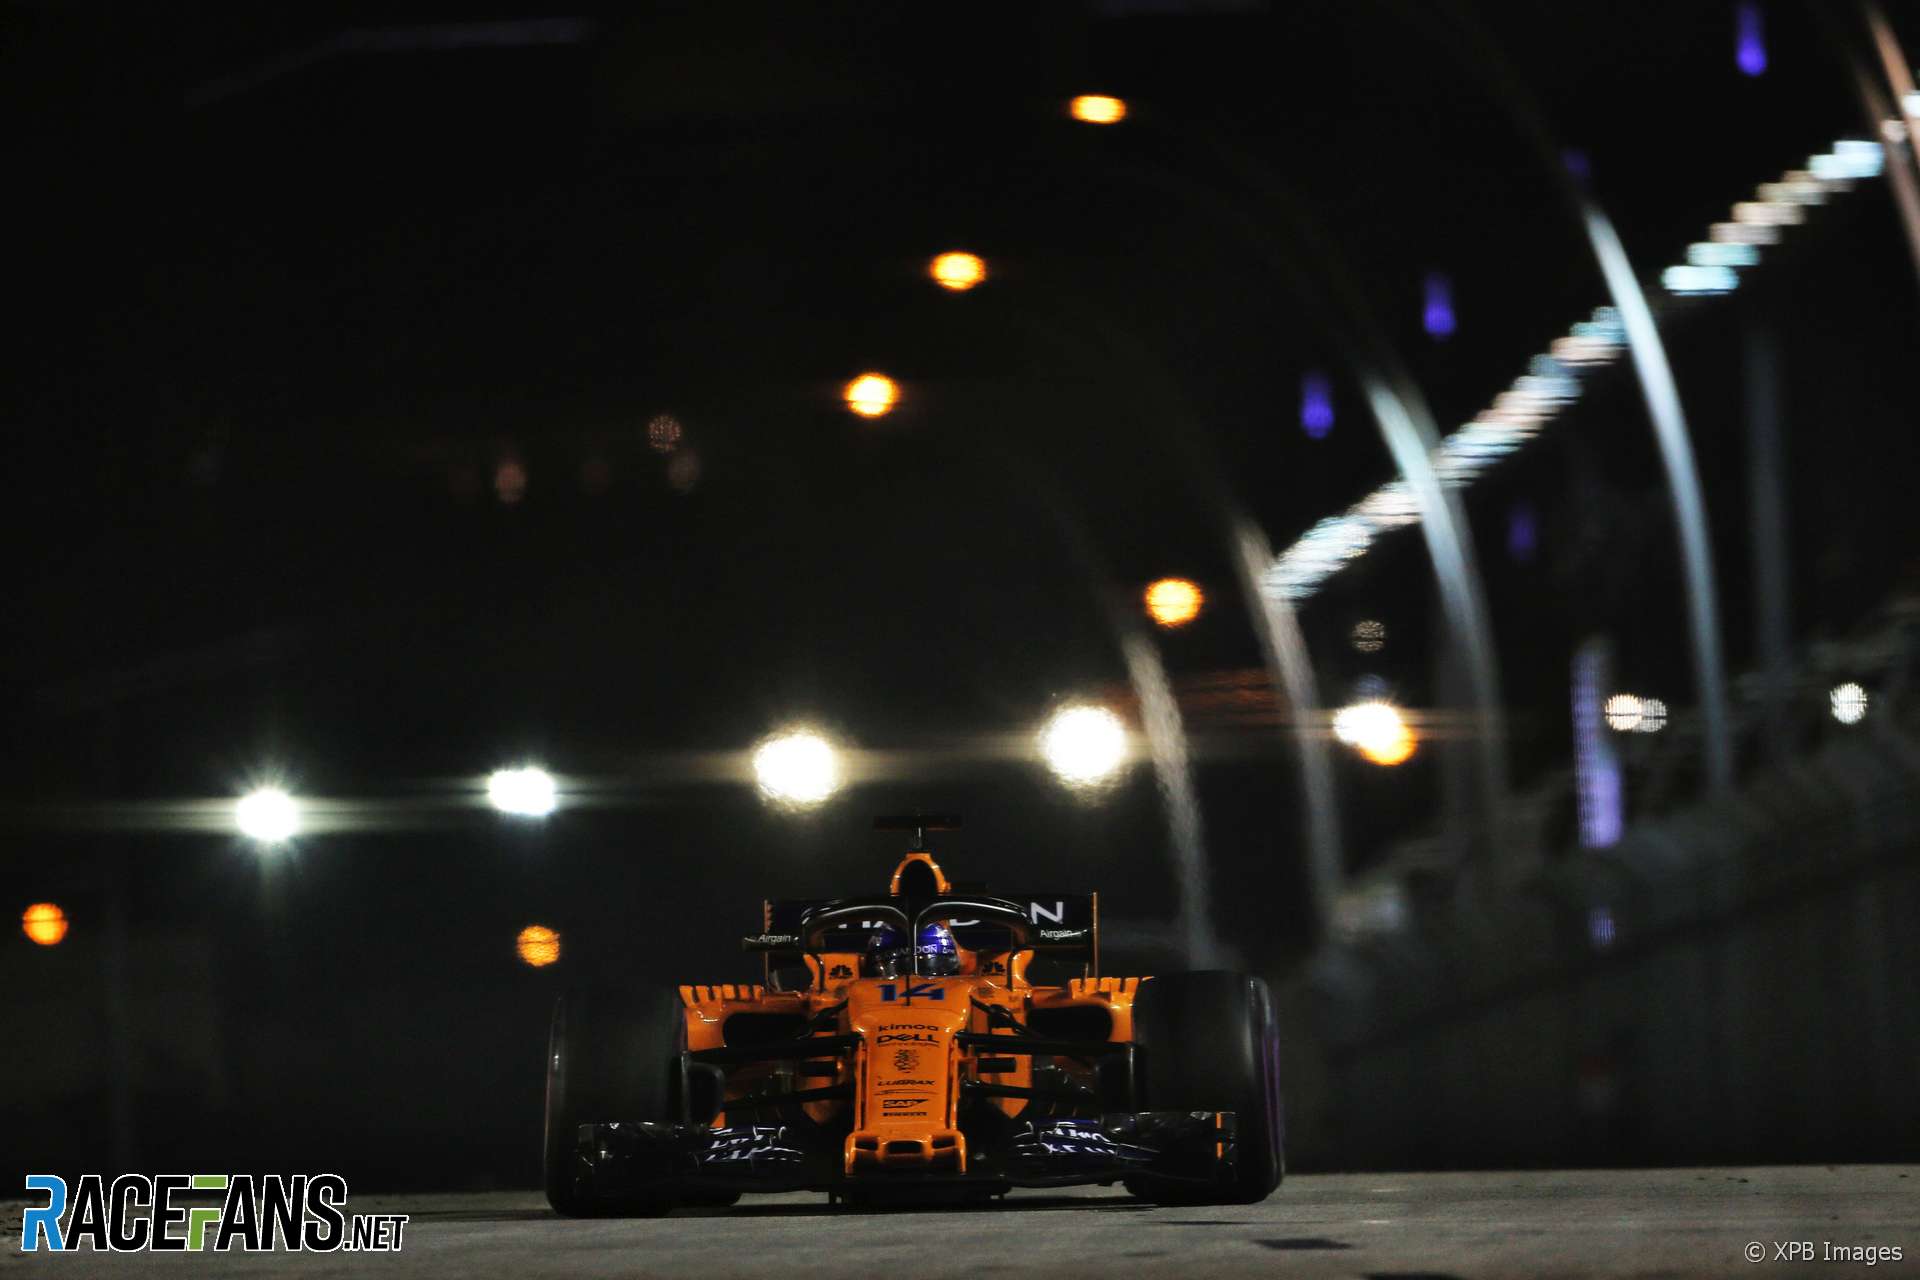 Fernando Alonso, McLaren, Singapore, 2018